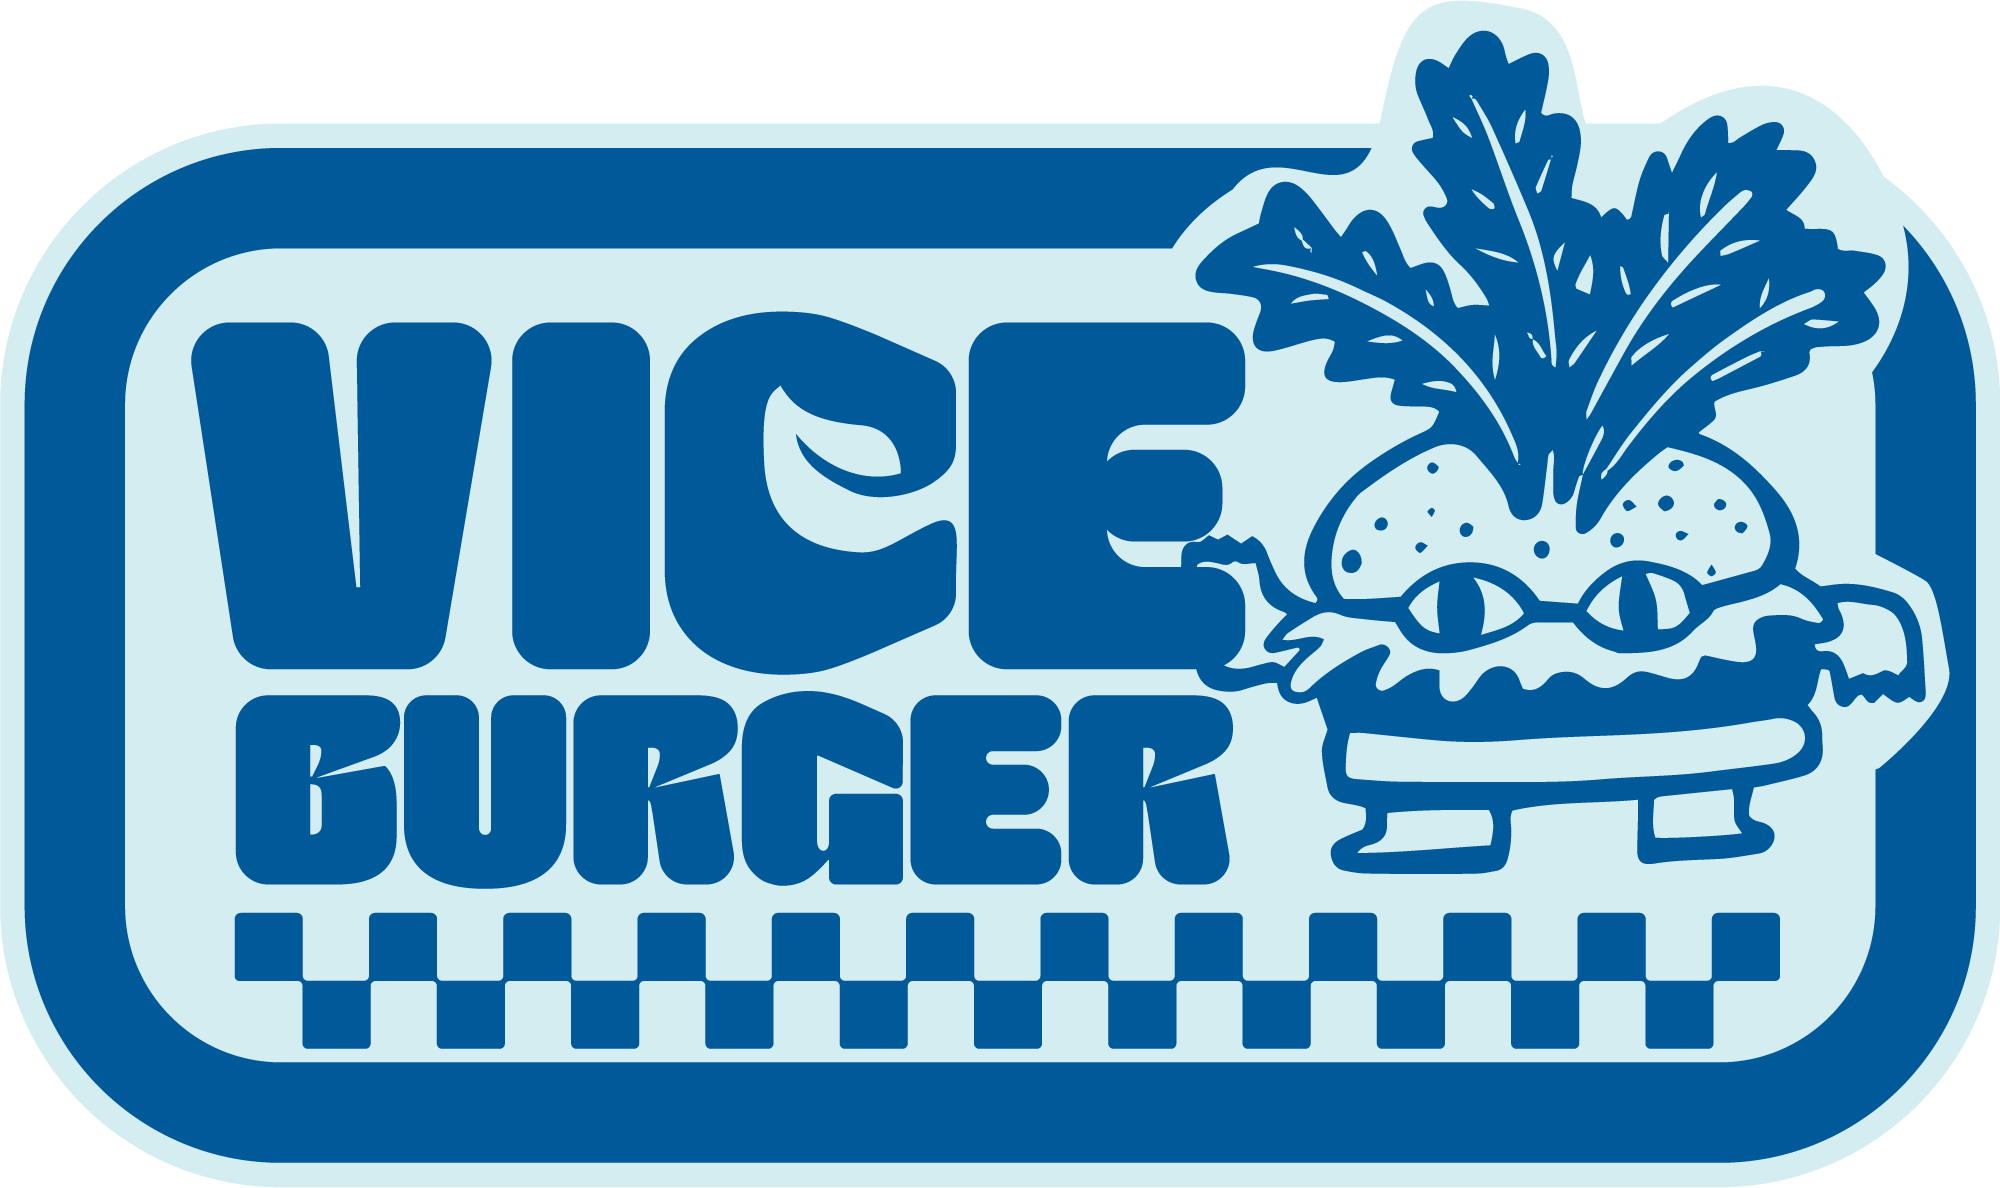 The Cooper Studio designed this Vice Burger badge featuring the monster veggie burger